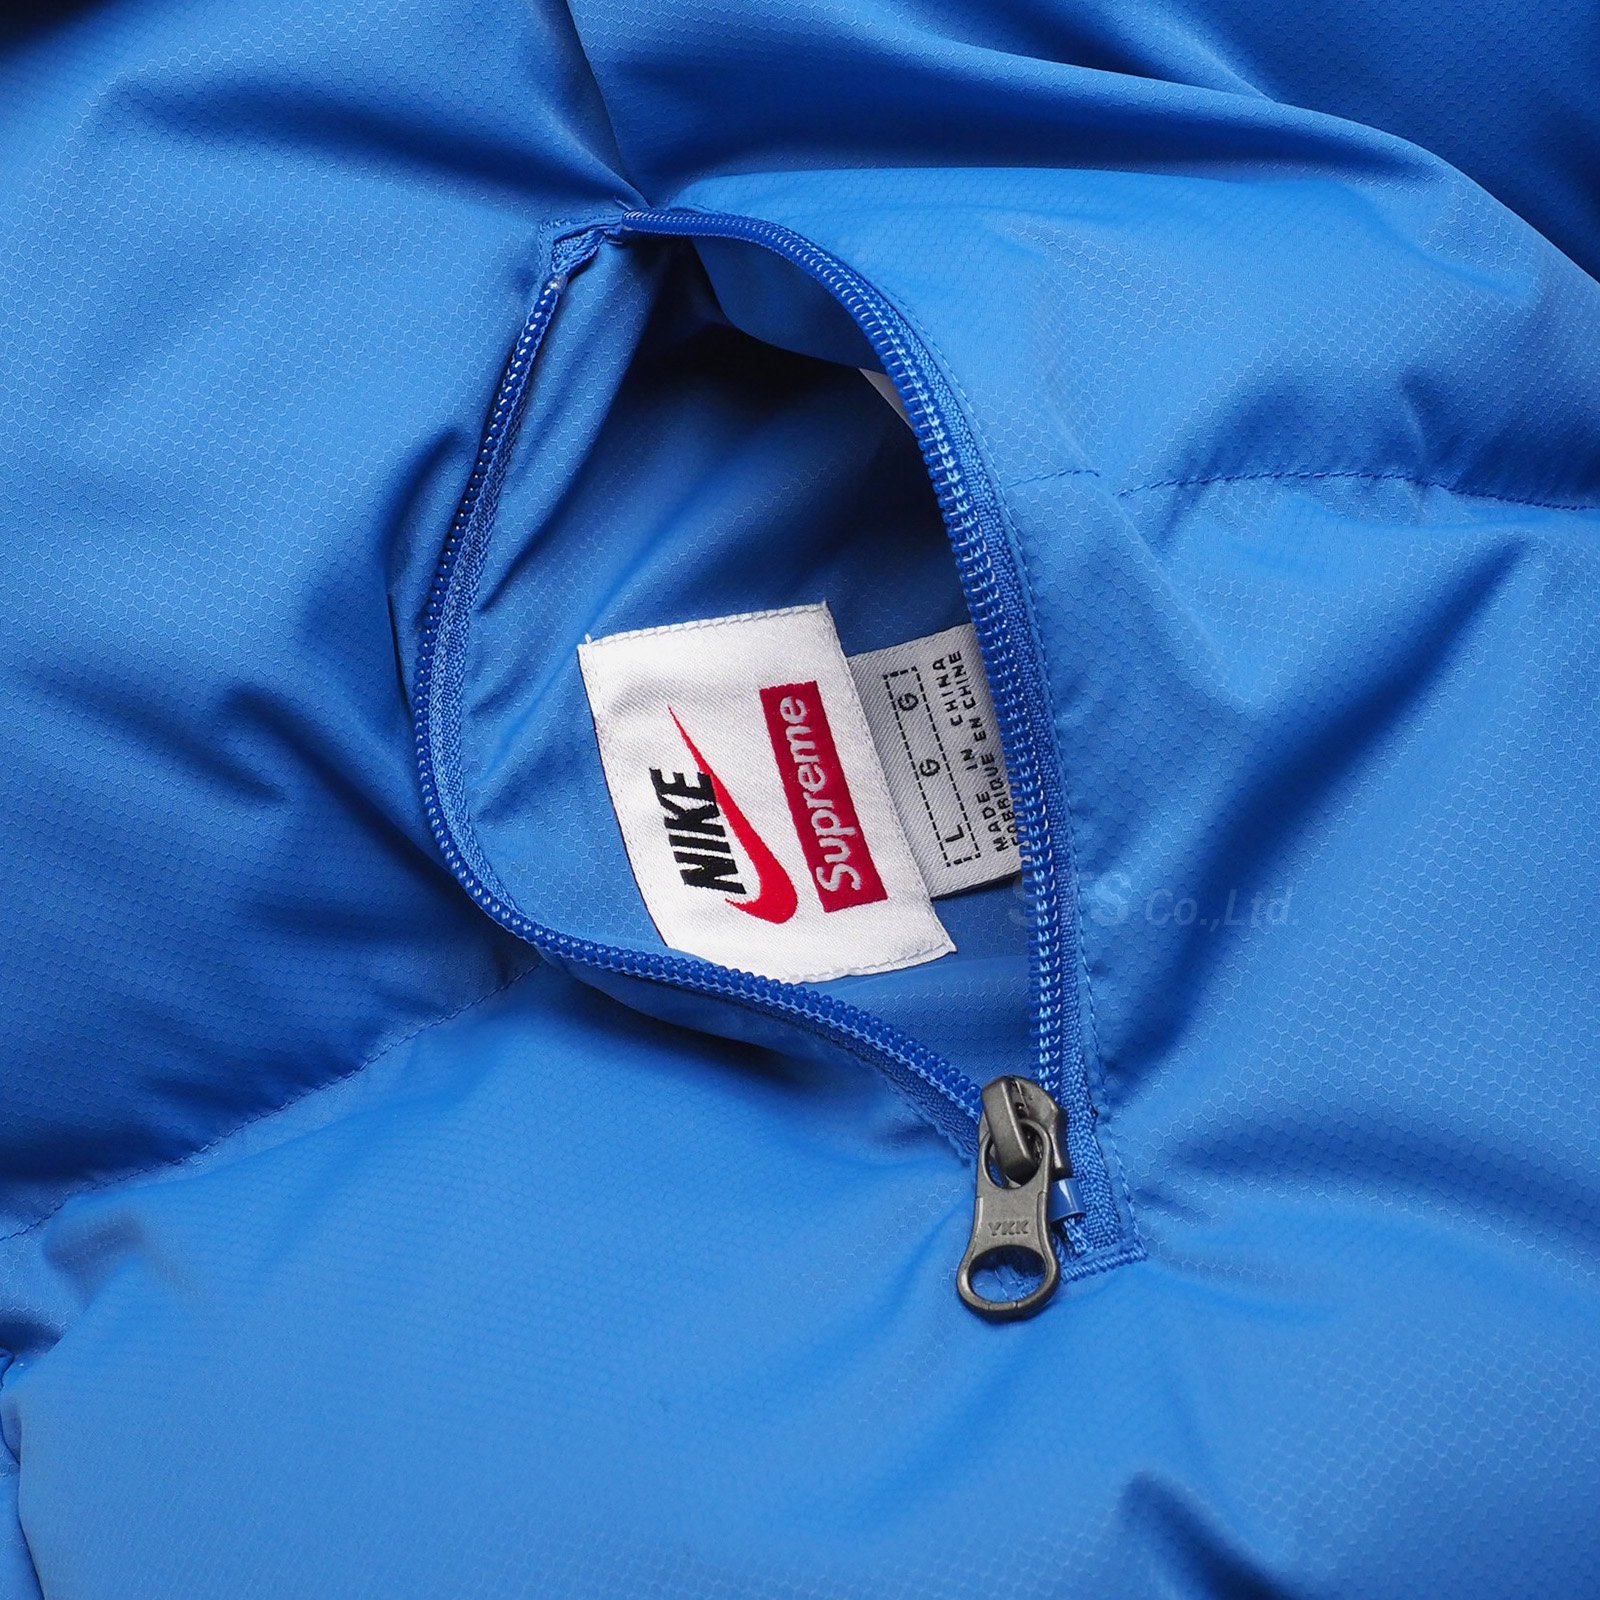 Supreme/Nike Reversible Puffy Jacket - UG.SHAFT